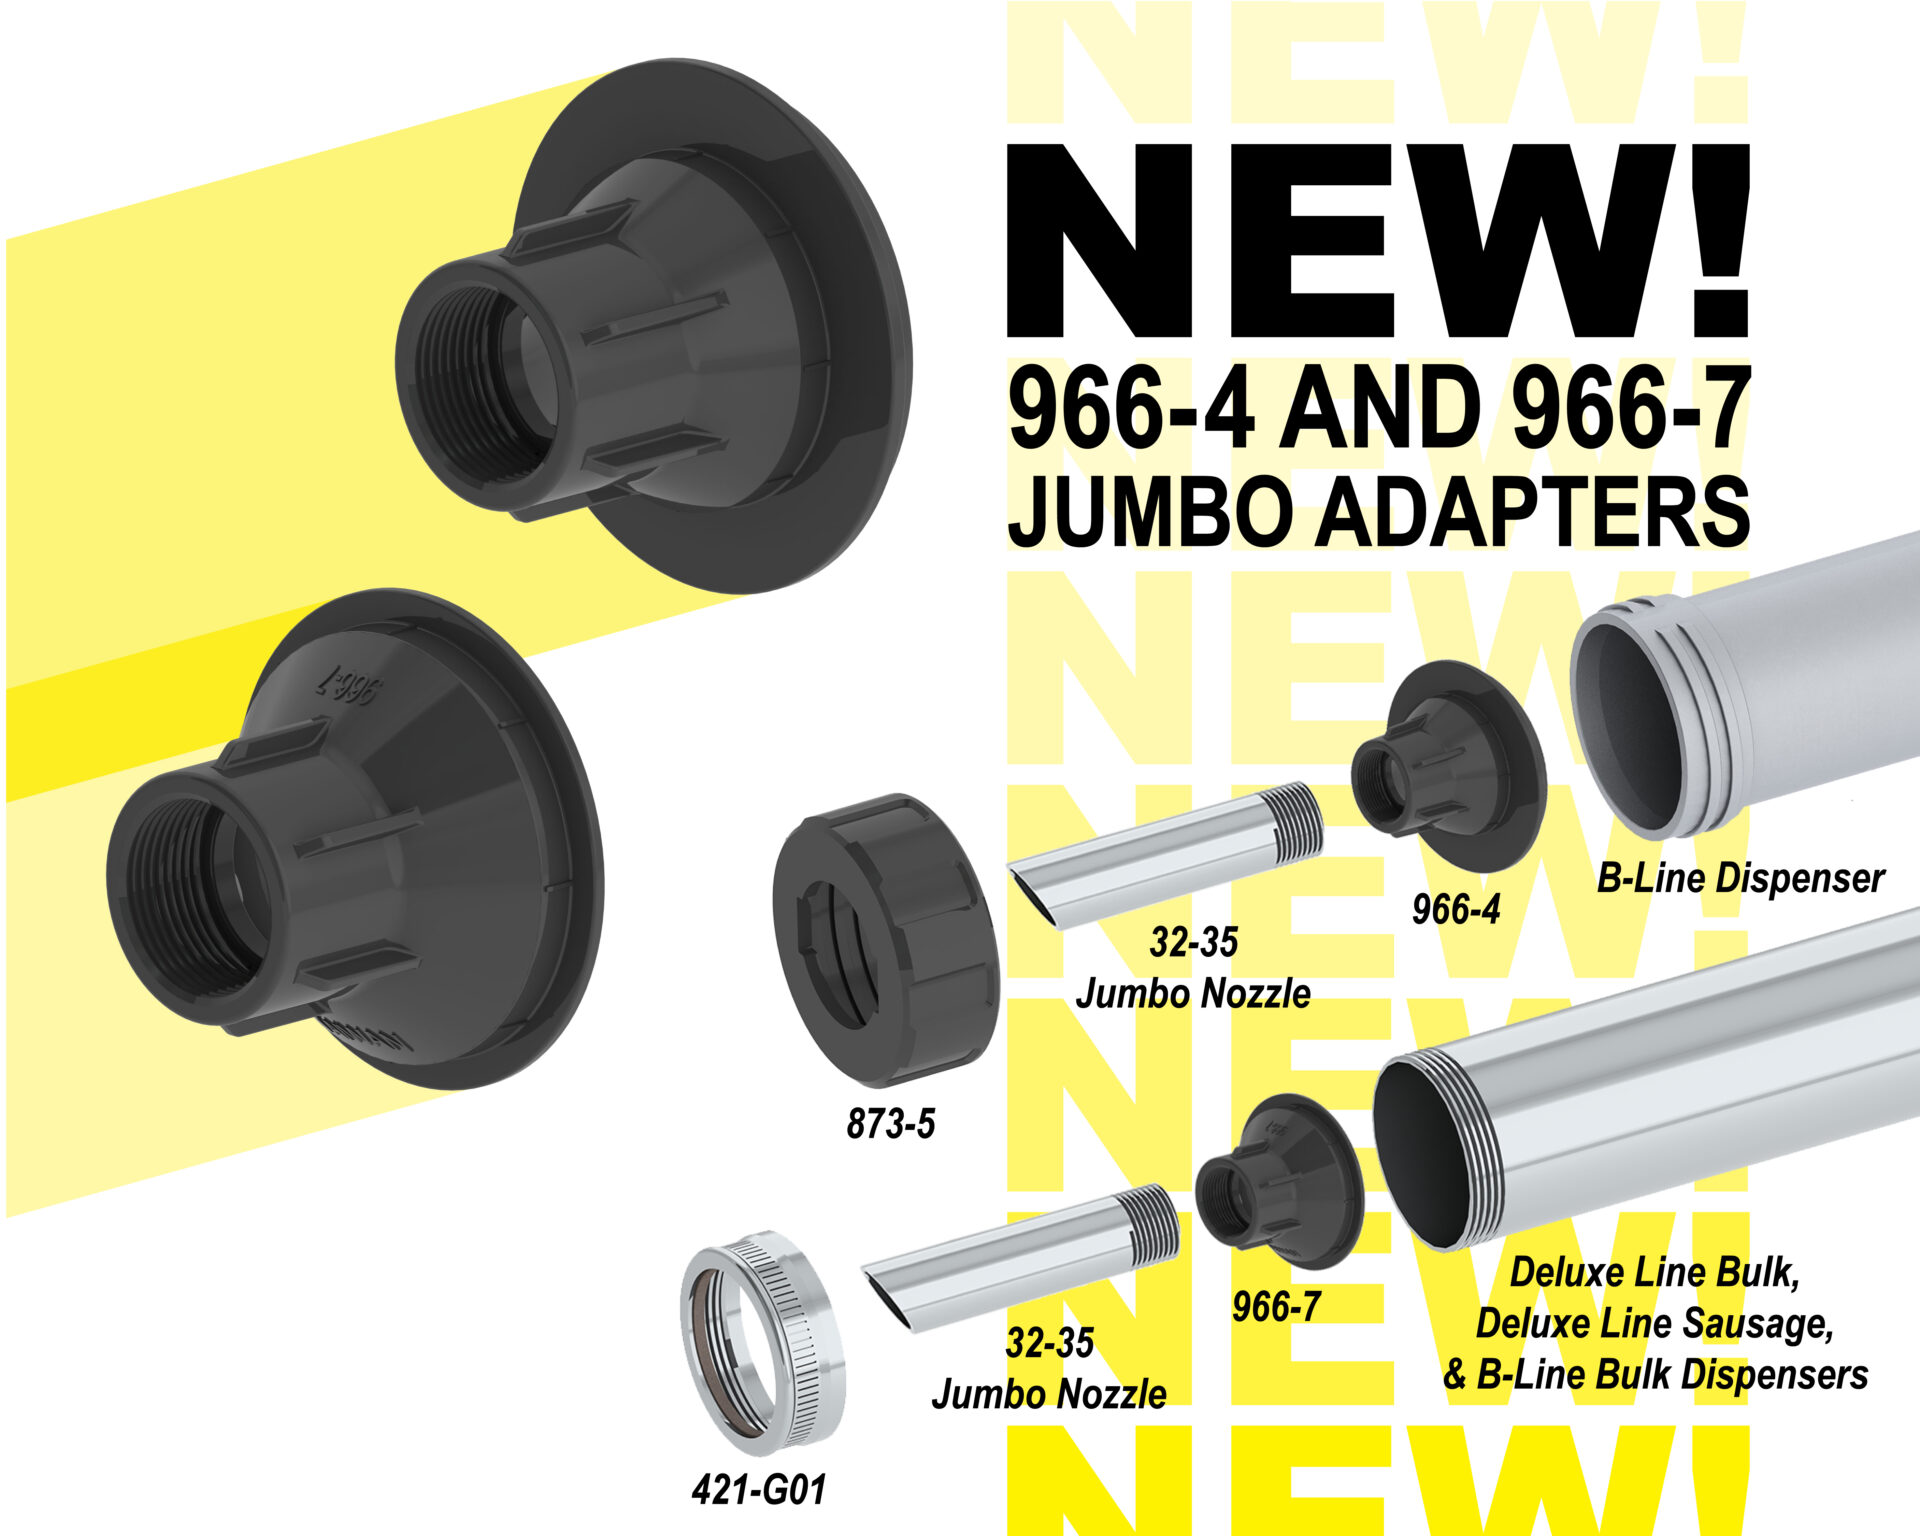 Albion Engineering's New 966-4 & 966-7 Jumbo Adapters